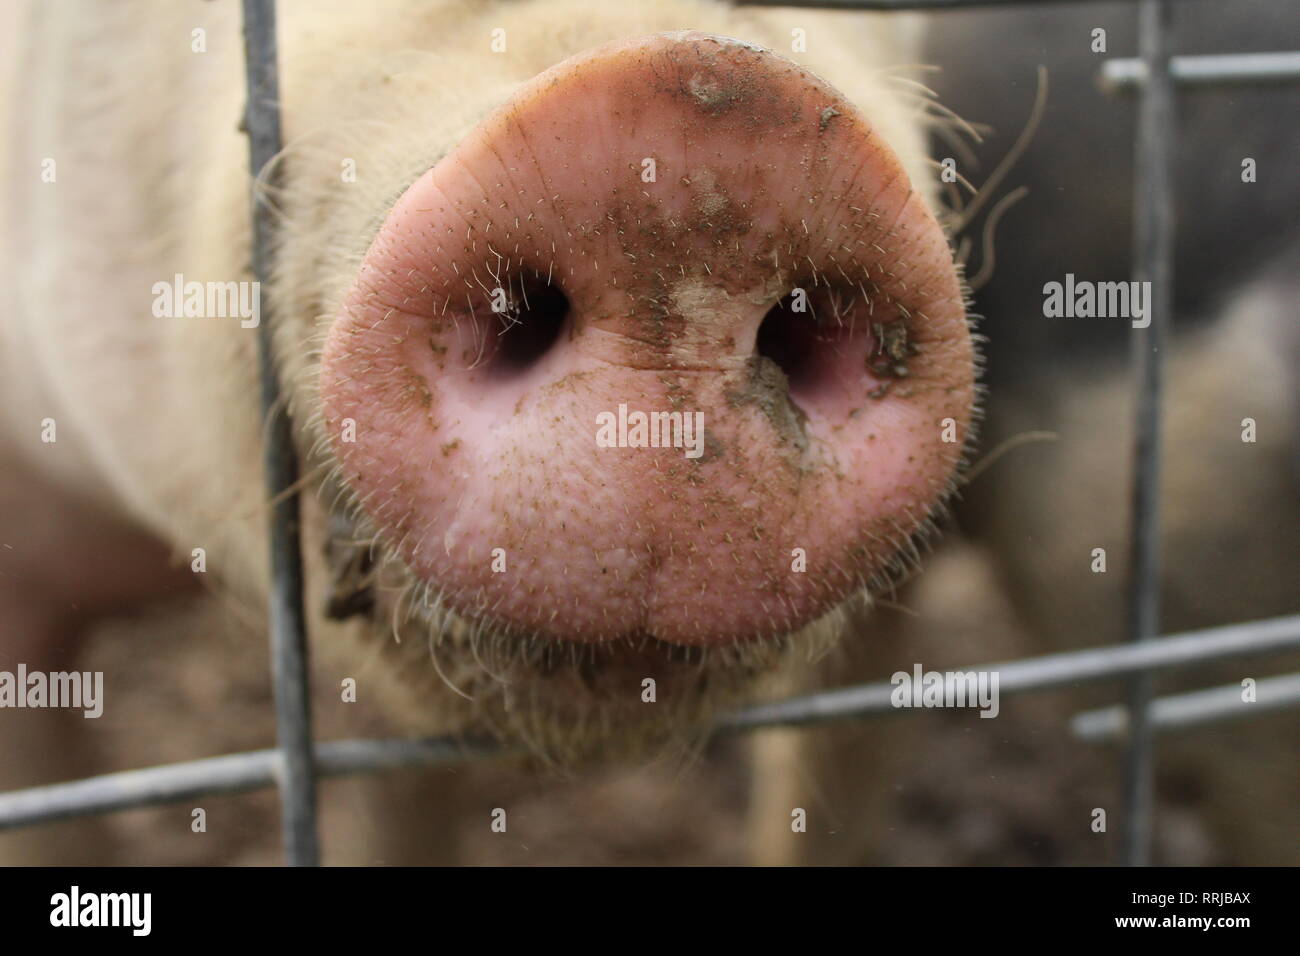 pig nose Stock Photo